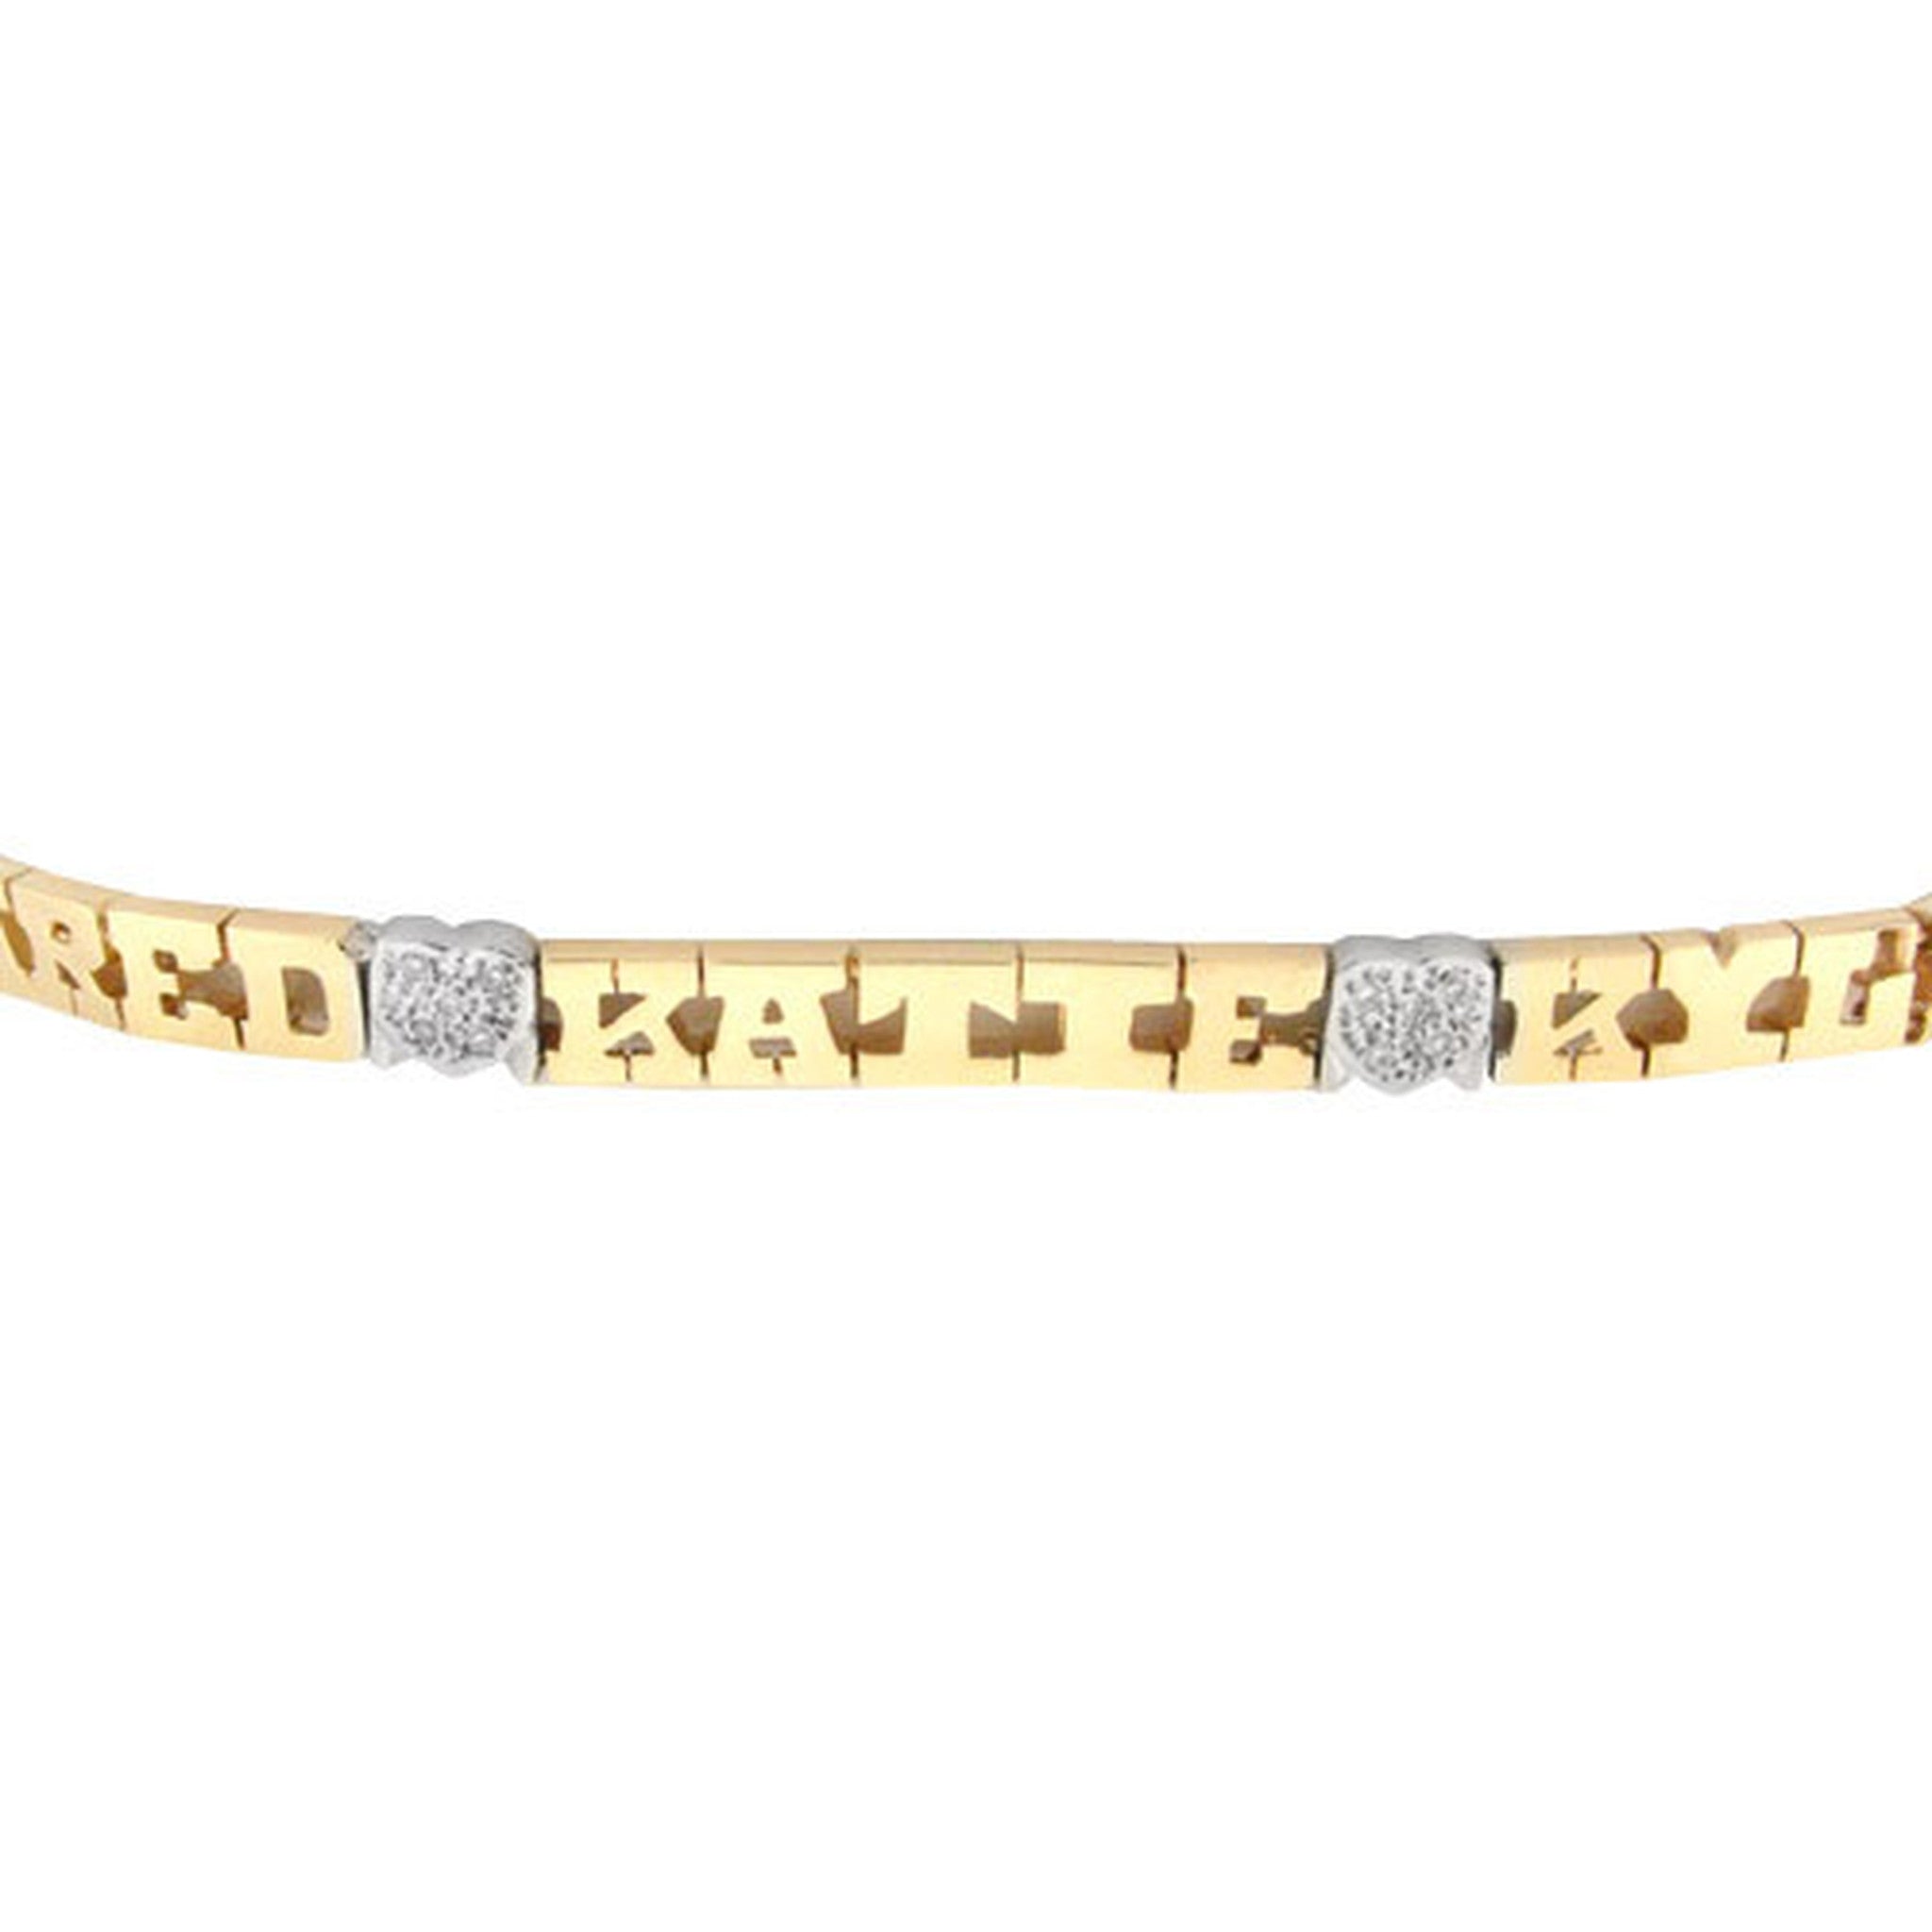 Bracelet-6 mm 14K Gold Family Name Bracelet - Letters with Diamond